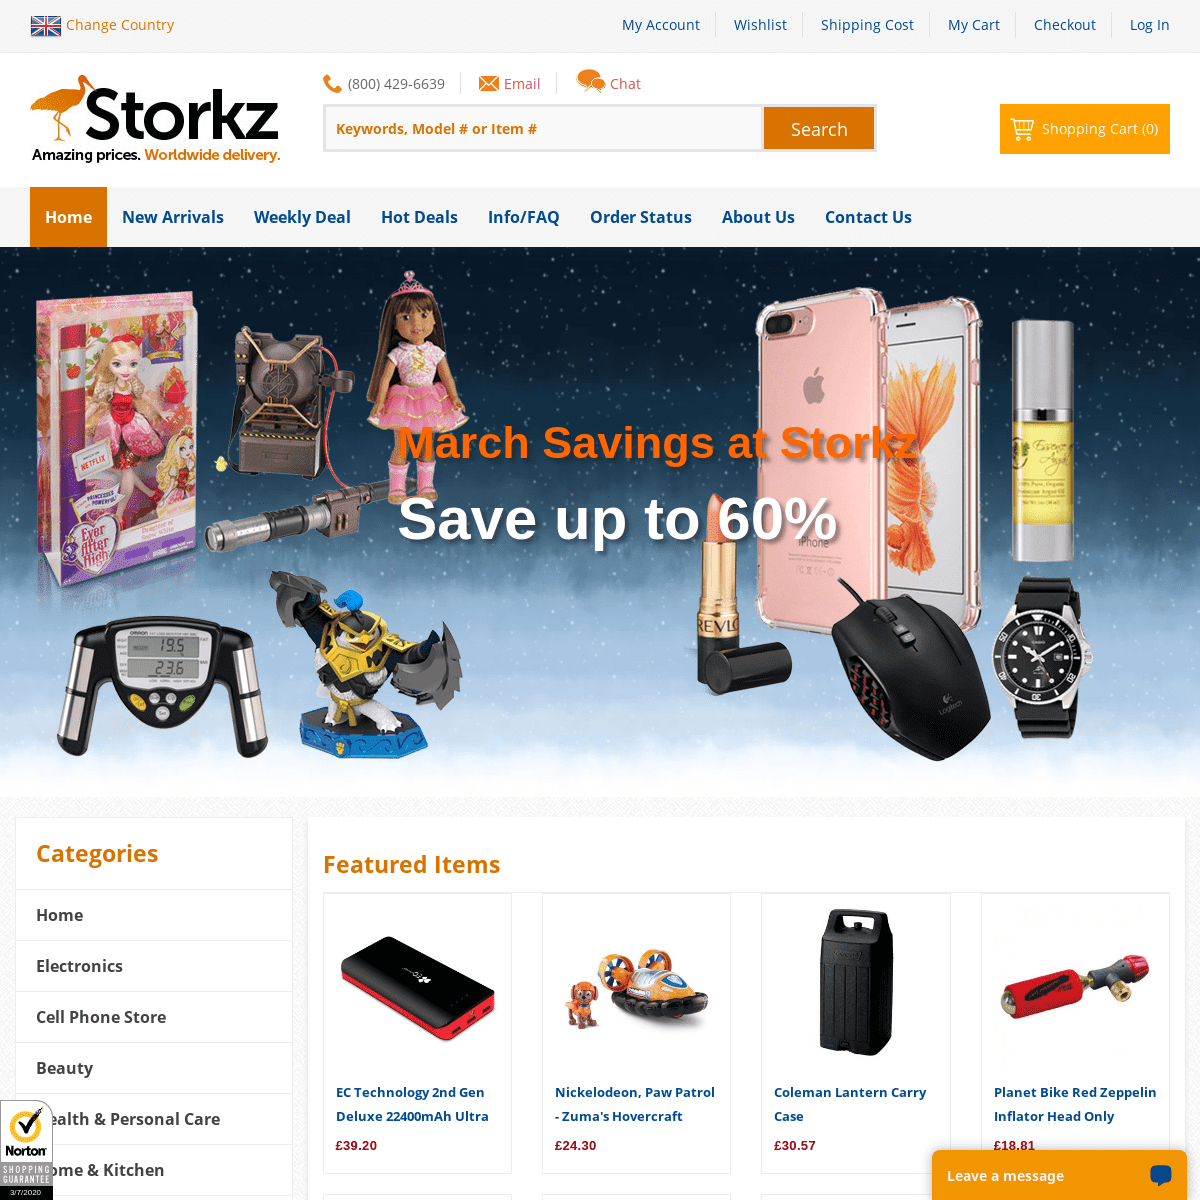 A complete backup of storkz.com